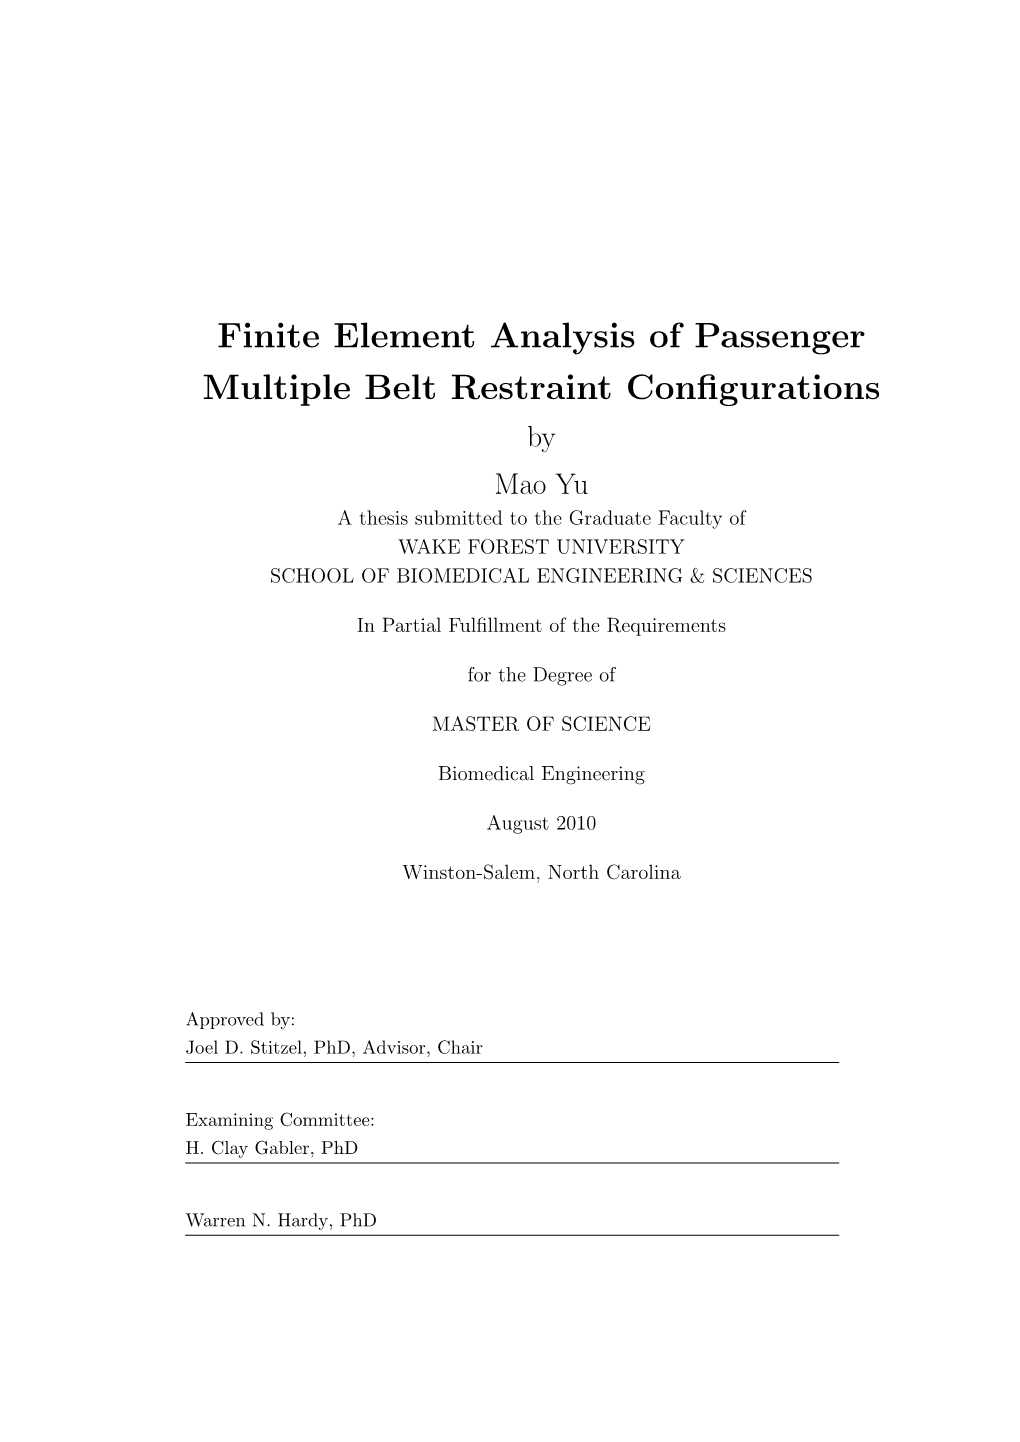 Finite Element Analysis of Passenger Multiple Belt Restraint Configurations